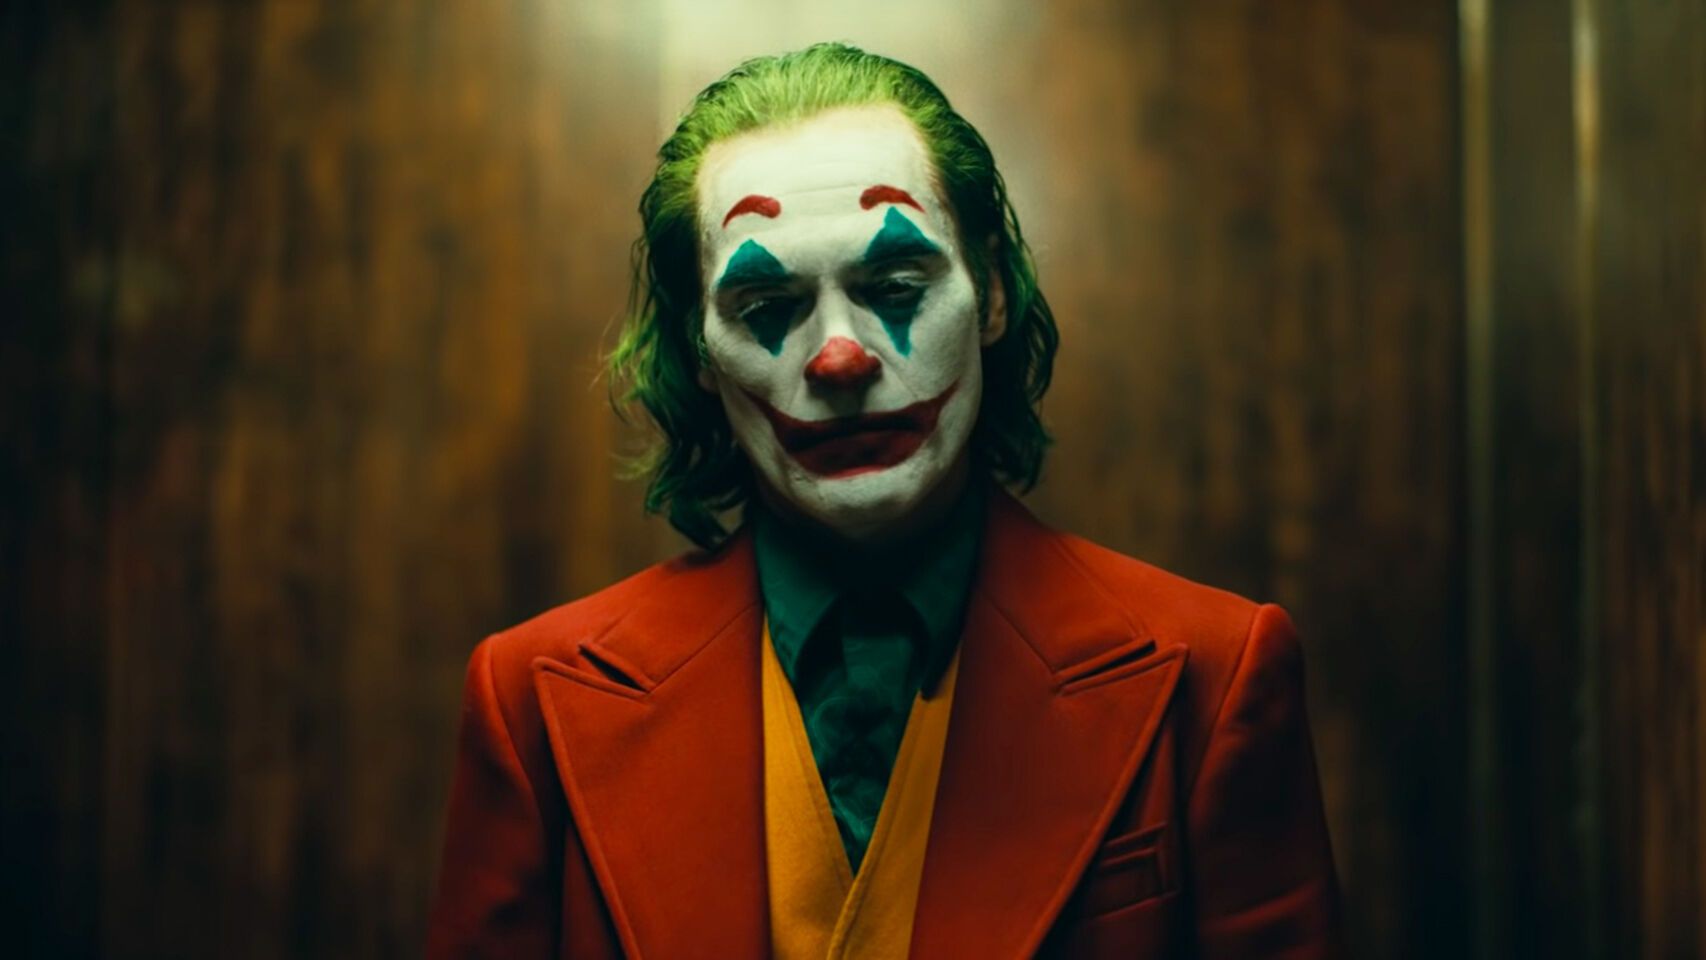 La mortal risa del 'Joker' inunda la gran pantalla